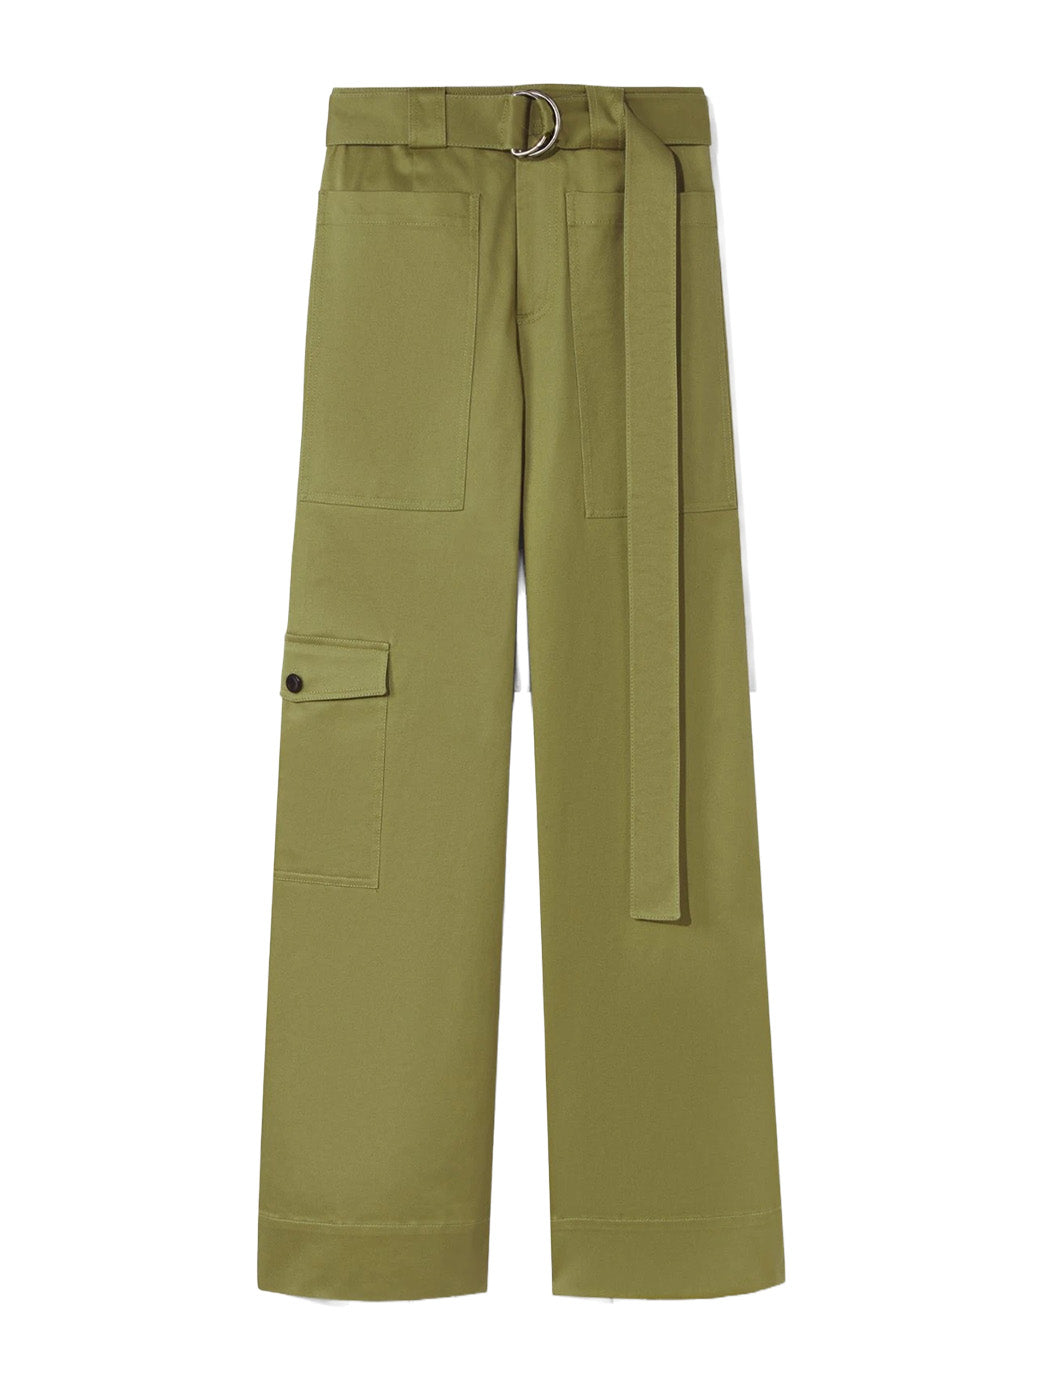 Cotton Twill Cargo Pants in Khaki Green